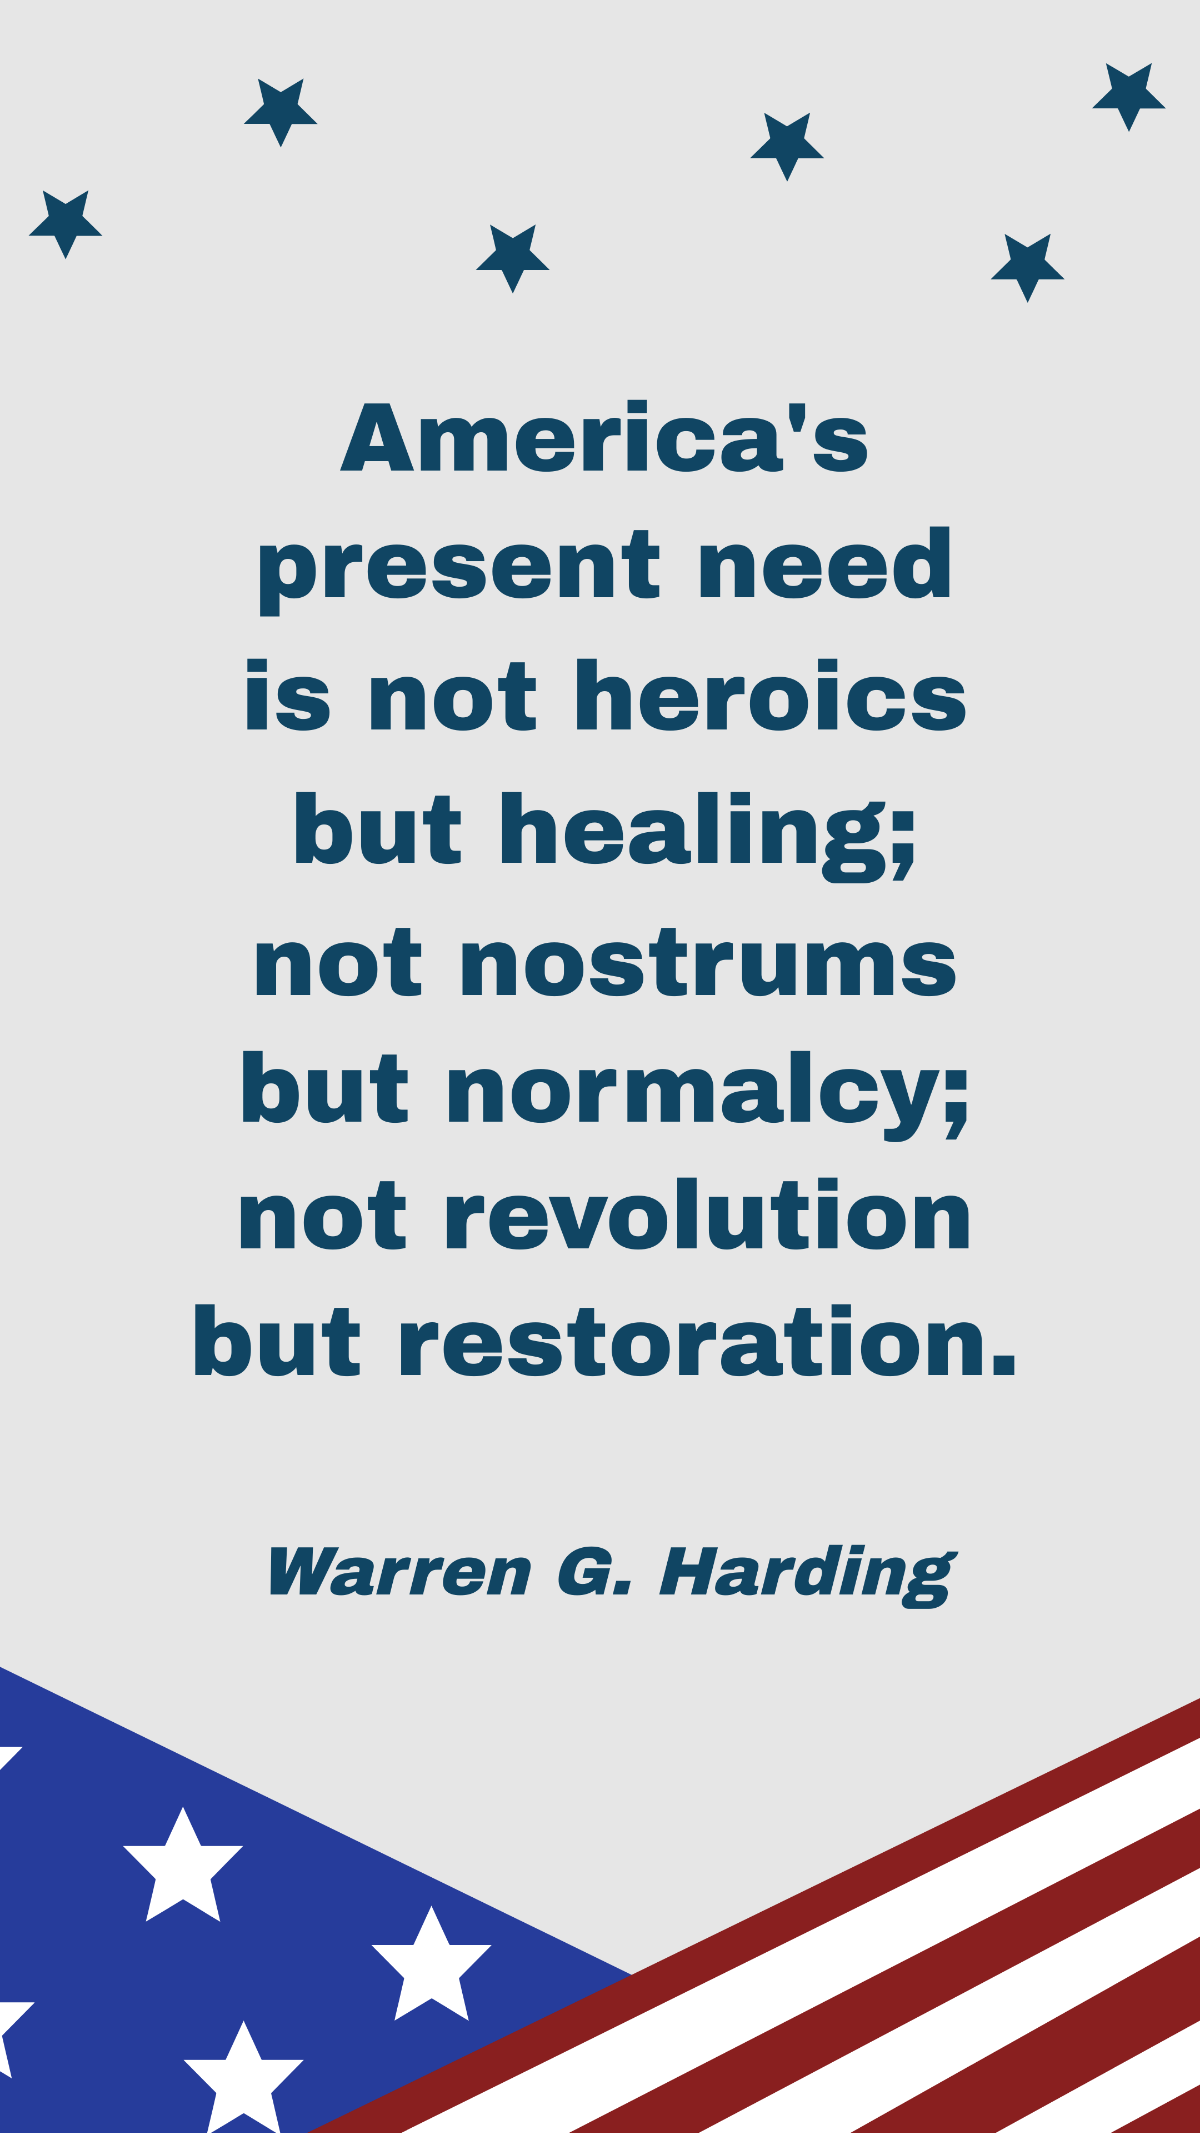 Warren G. Harding - America's present need is not heroics but healing; not nostrums but normalcy; not revolution but restoration. Template